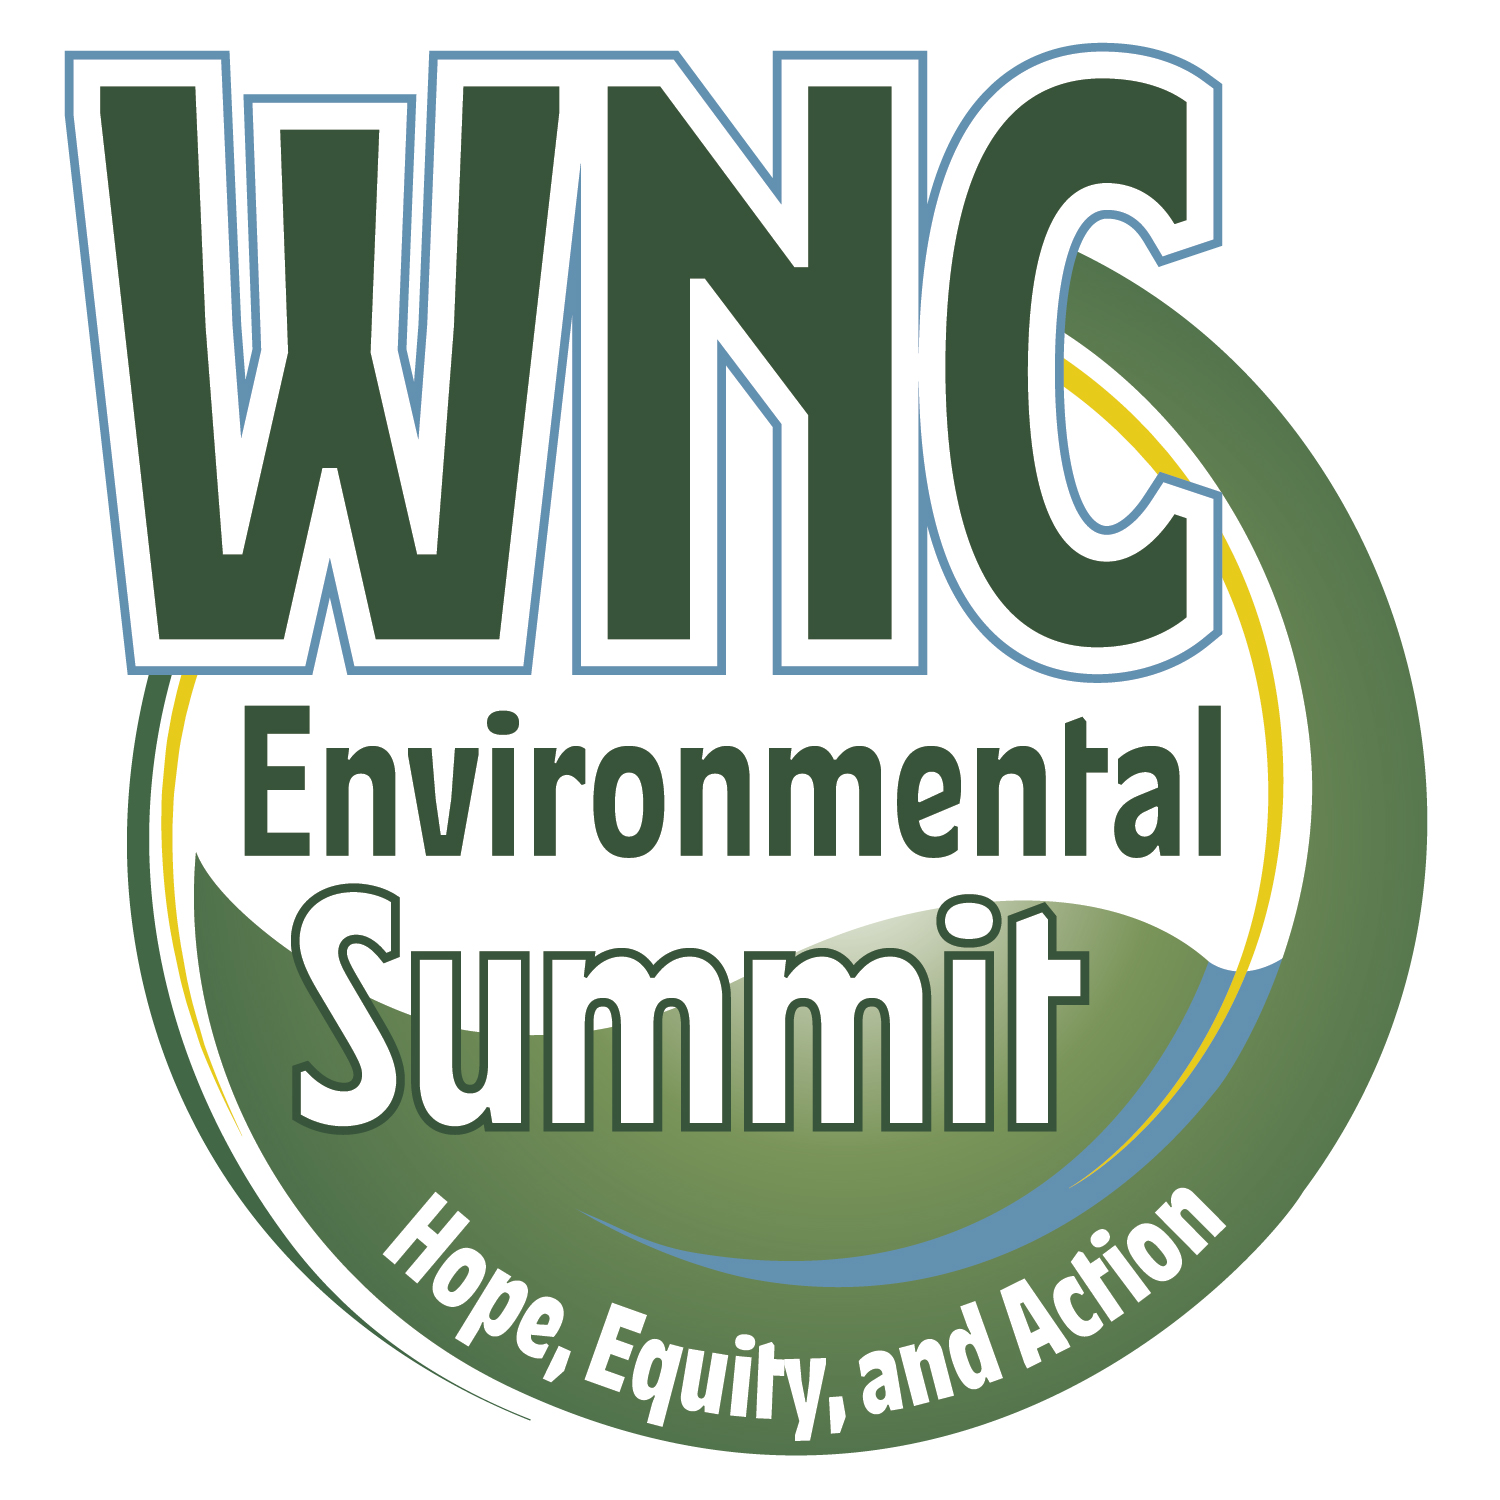 WNC Environmental Summit logo in circle